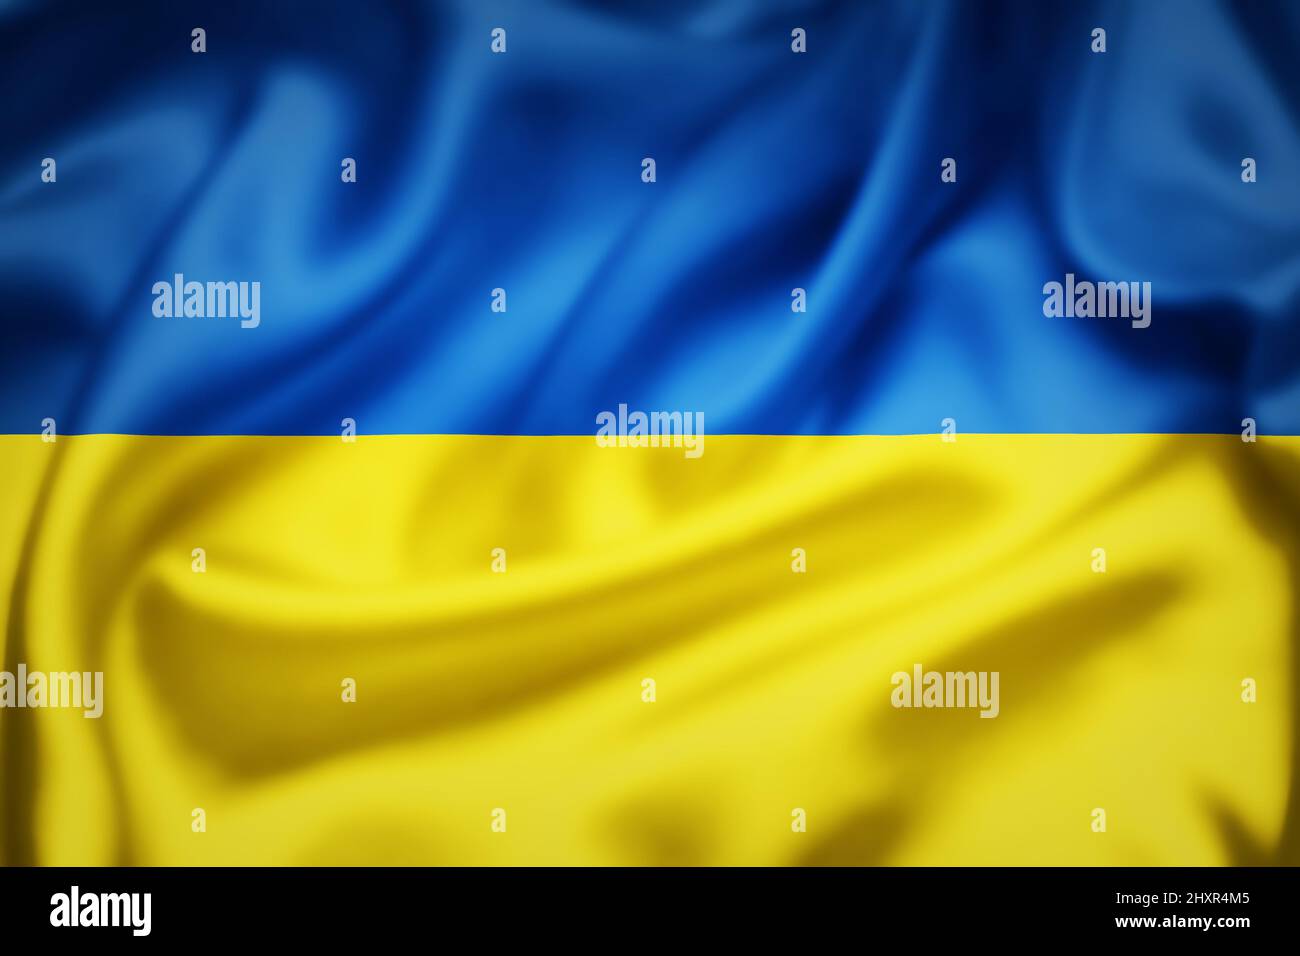 Silk flag of Ukraine illustration, concept of tense relations between Ukraine and Russia Stock Photo